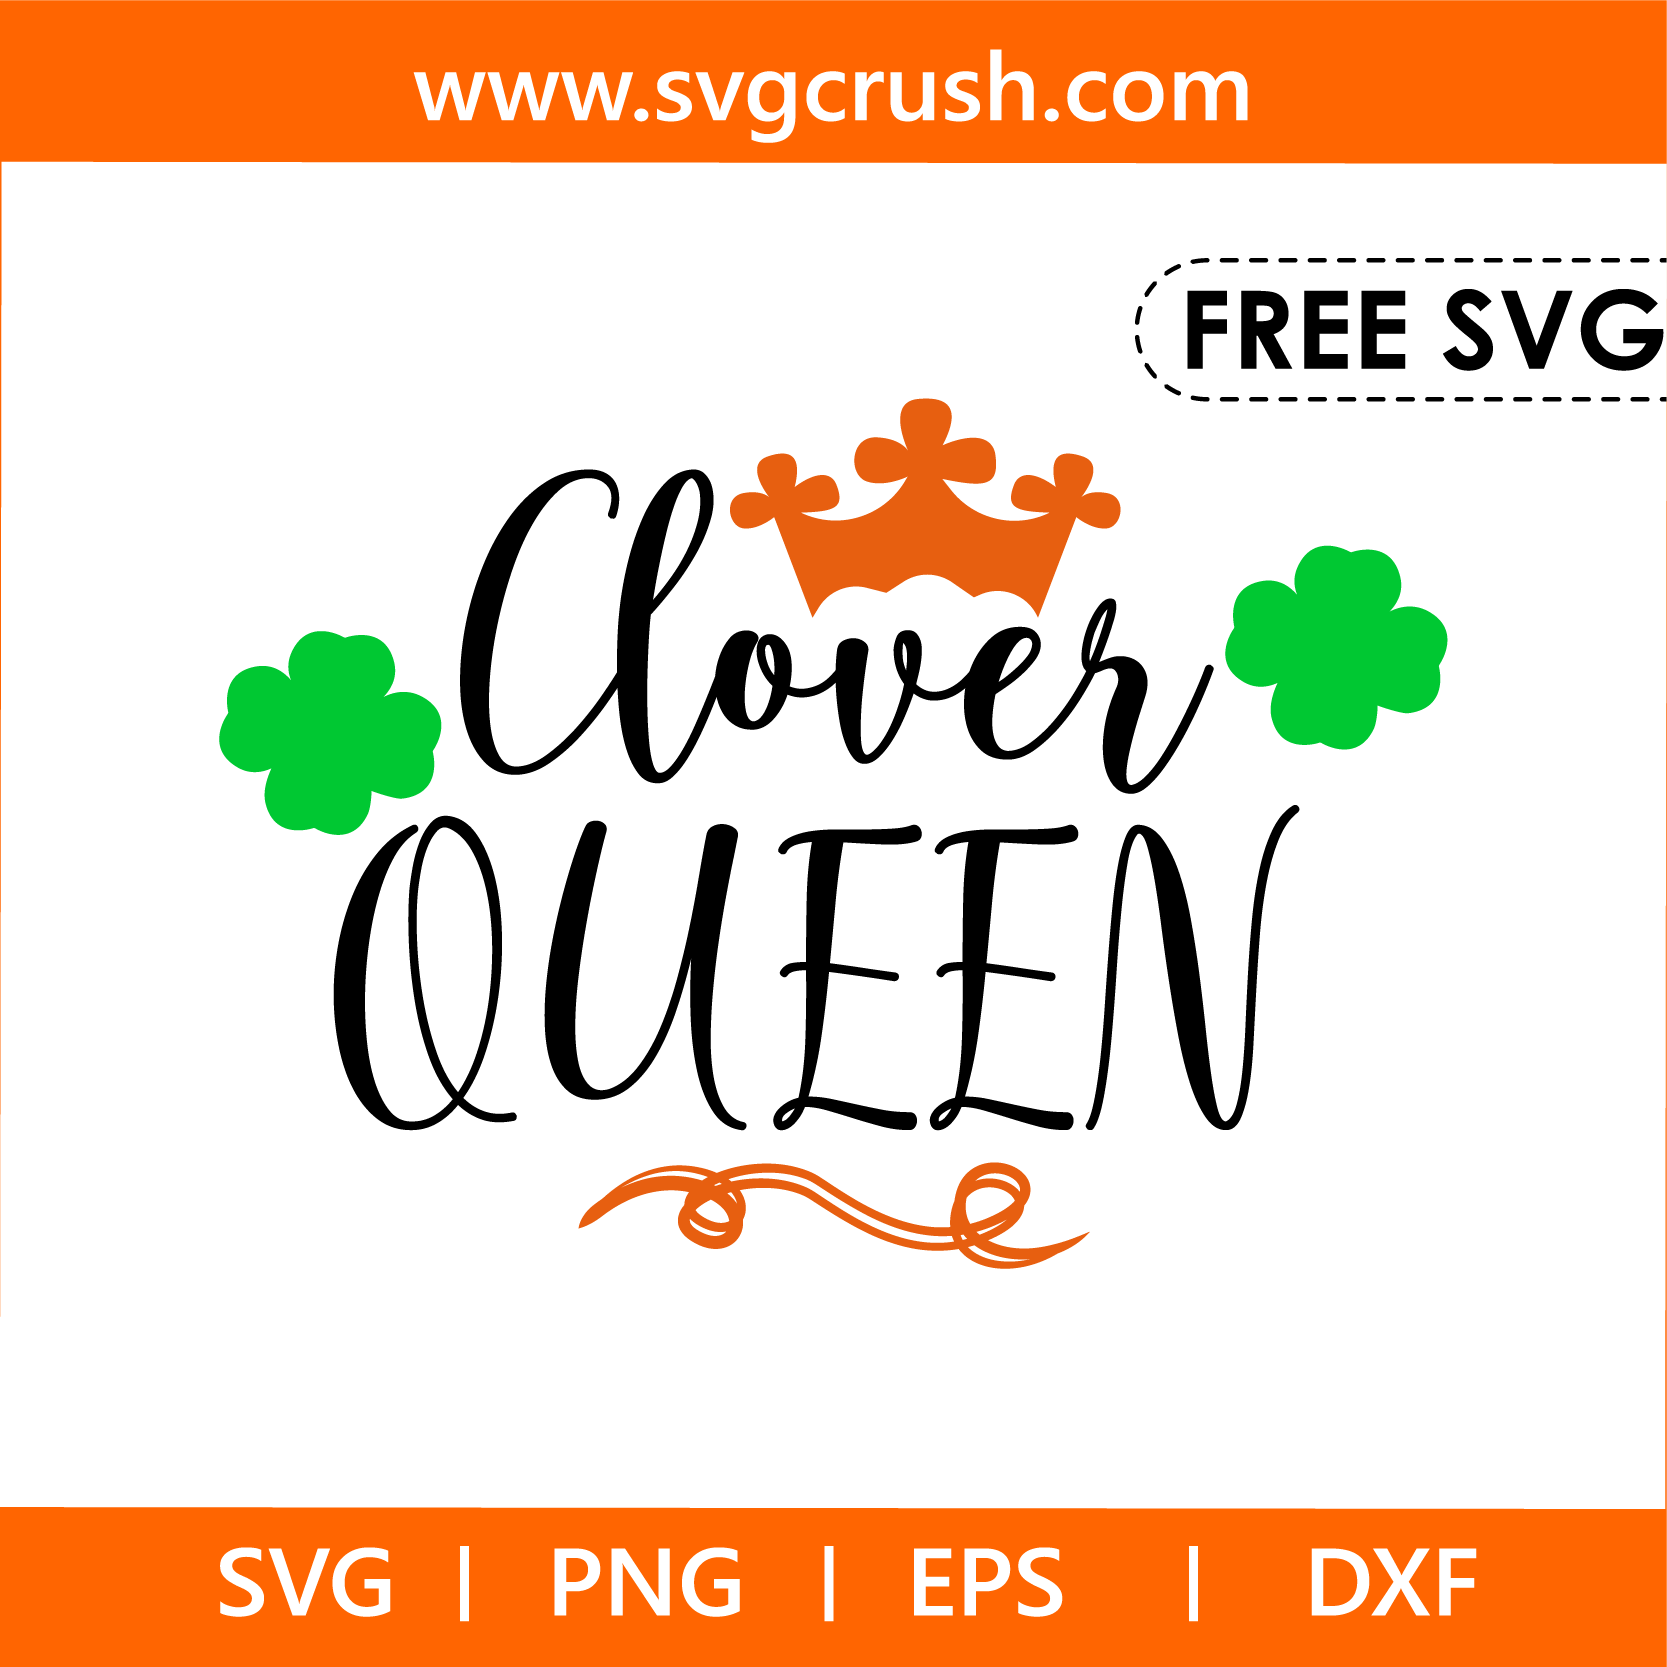 free clover-queen-006 svg